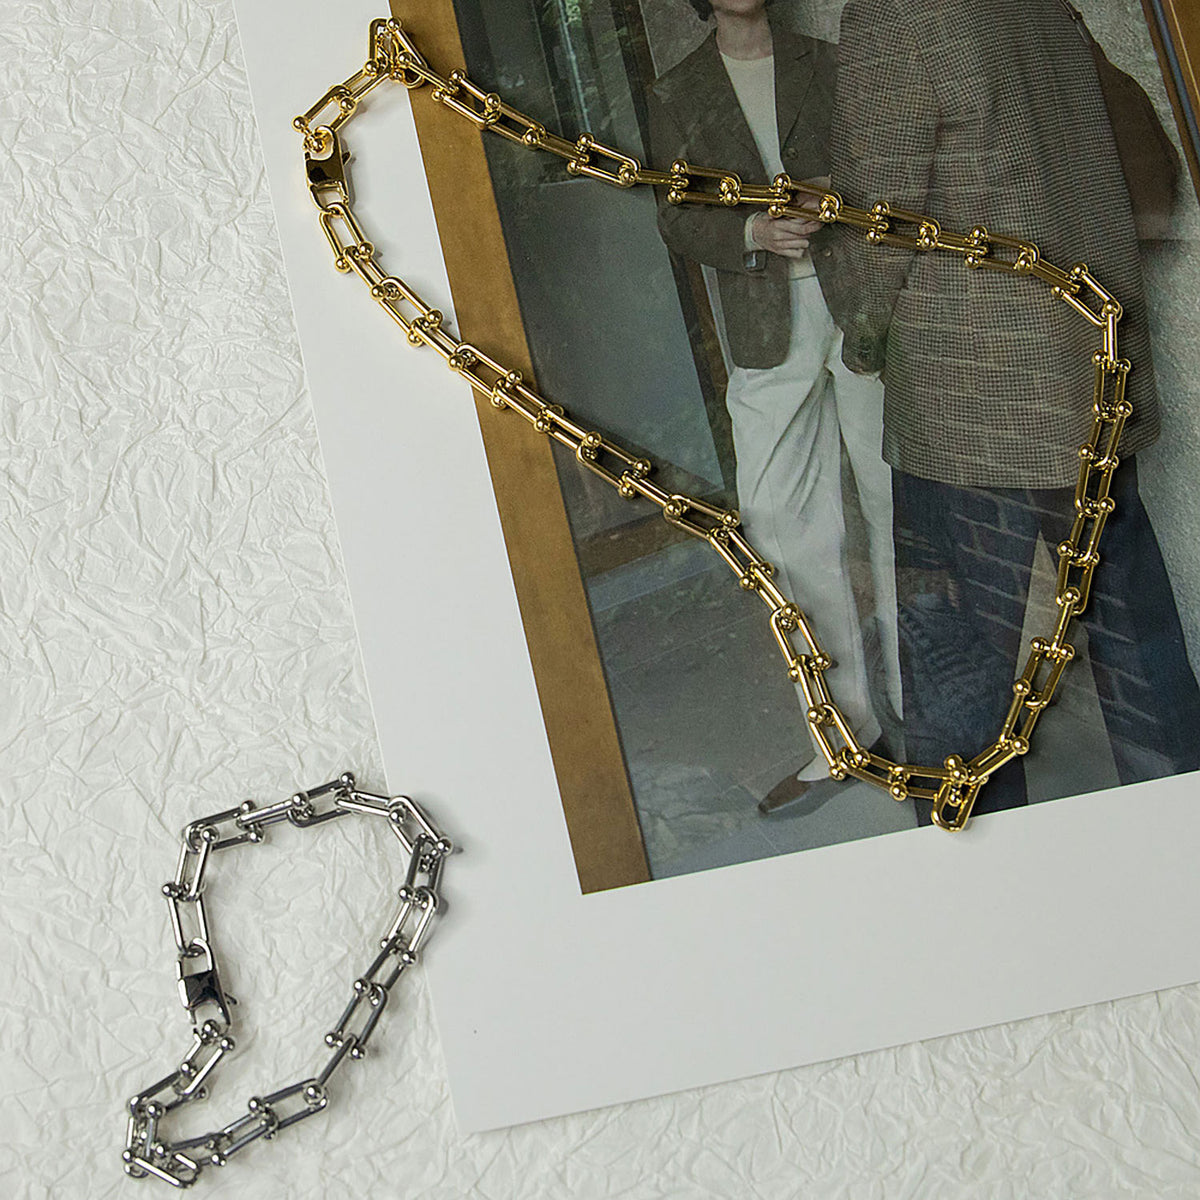 Design Chain Necklace